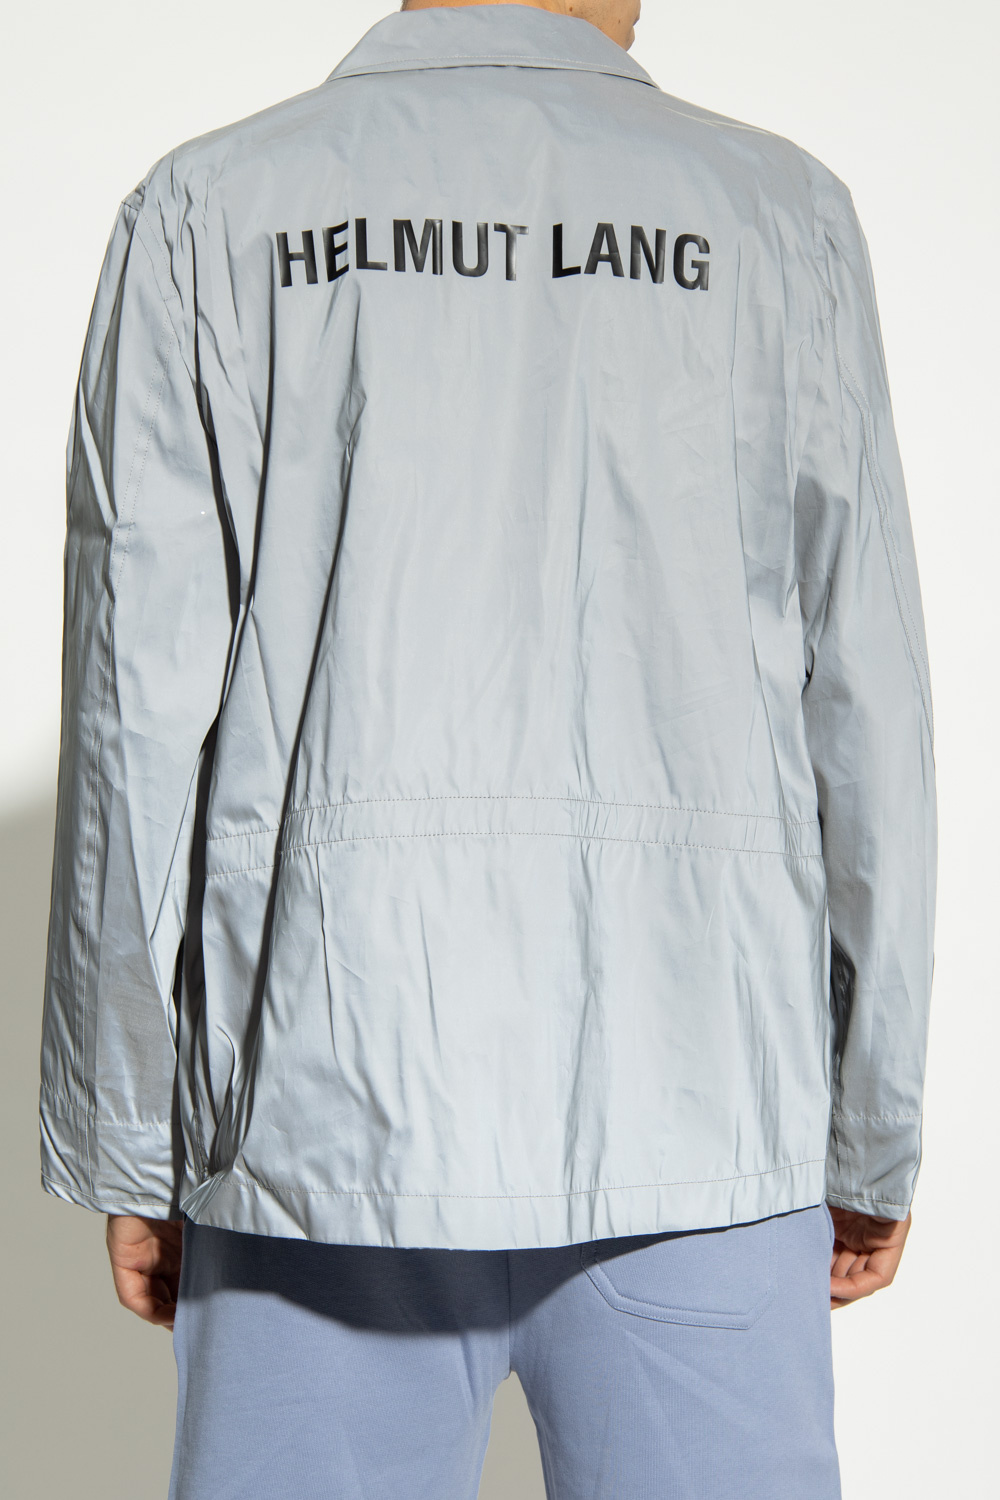 Helmut Lang body shirts for women